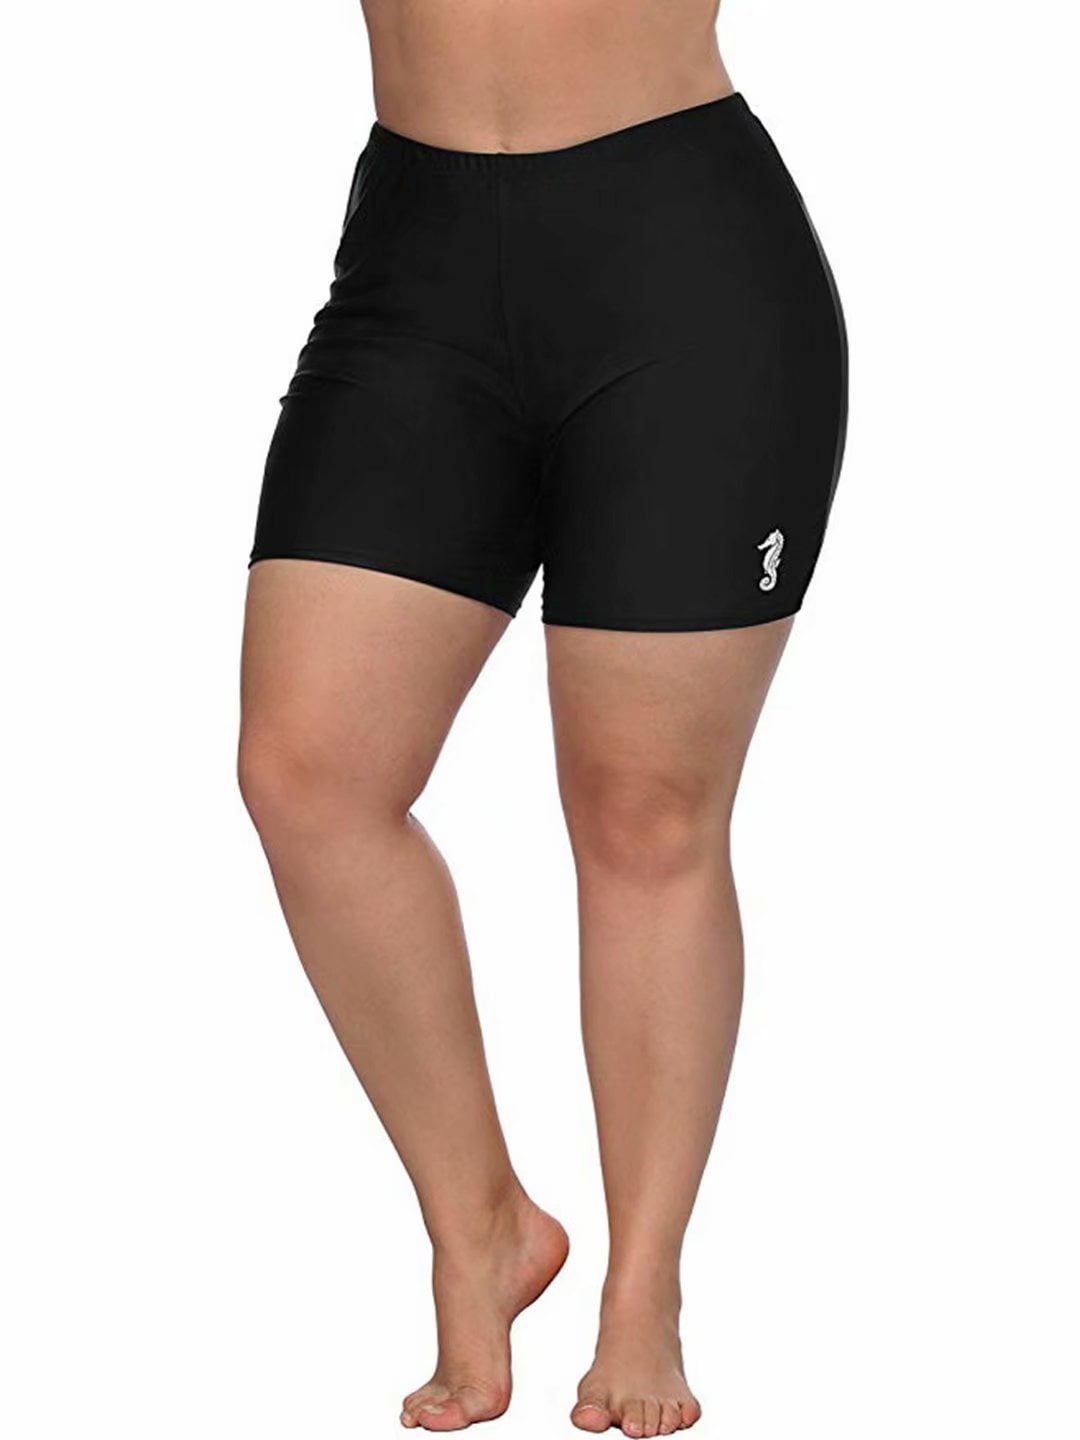 Tomppy Women Swimsuit Bottom Solid Ruched Swimwear Tankini Briefs Swim Shorts